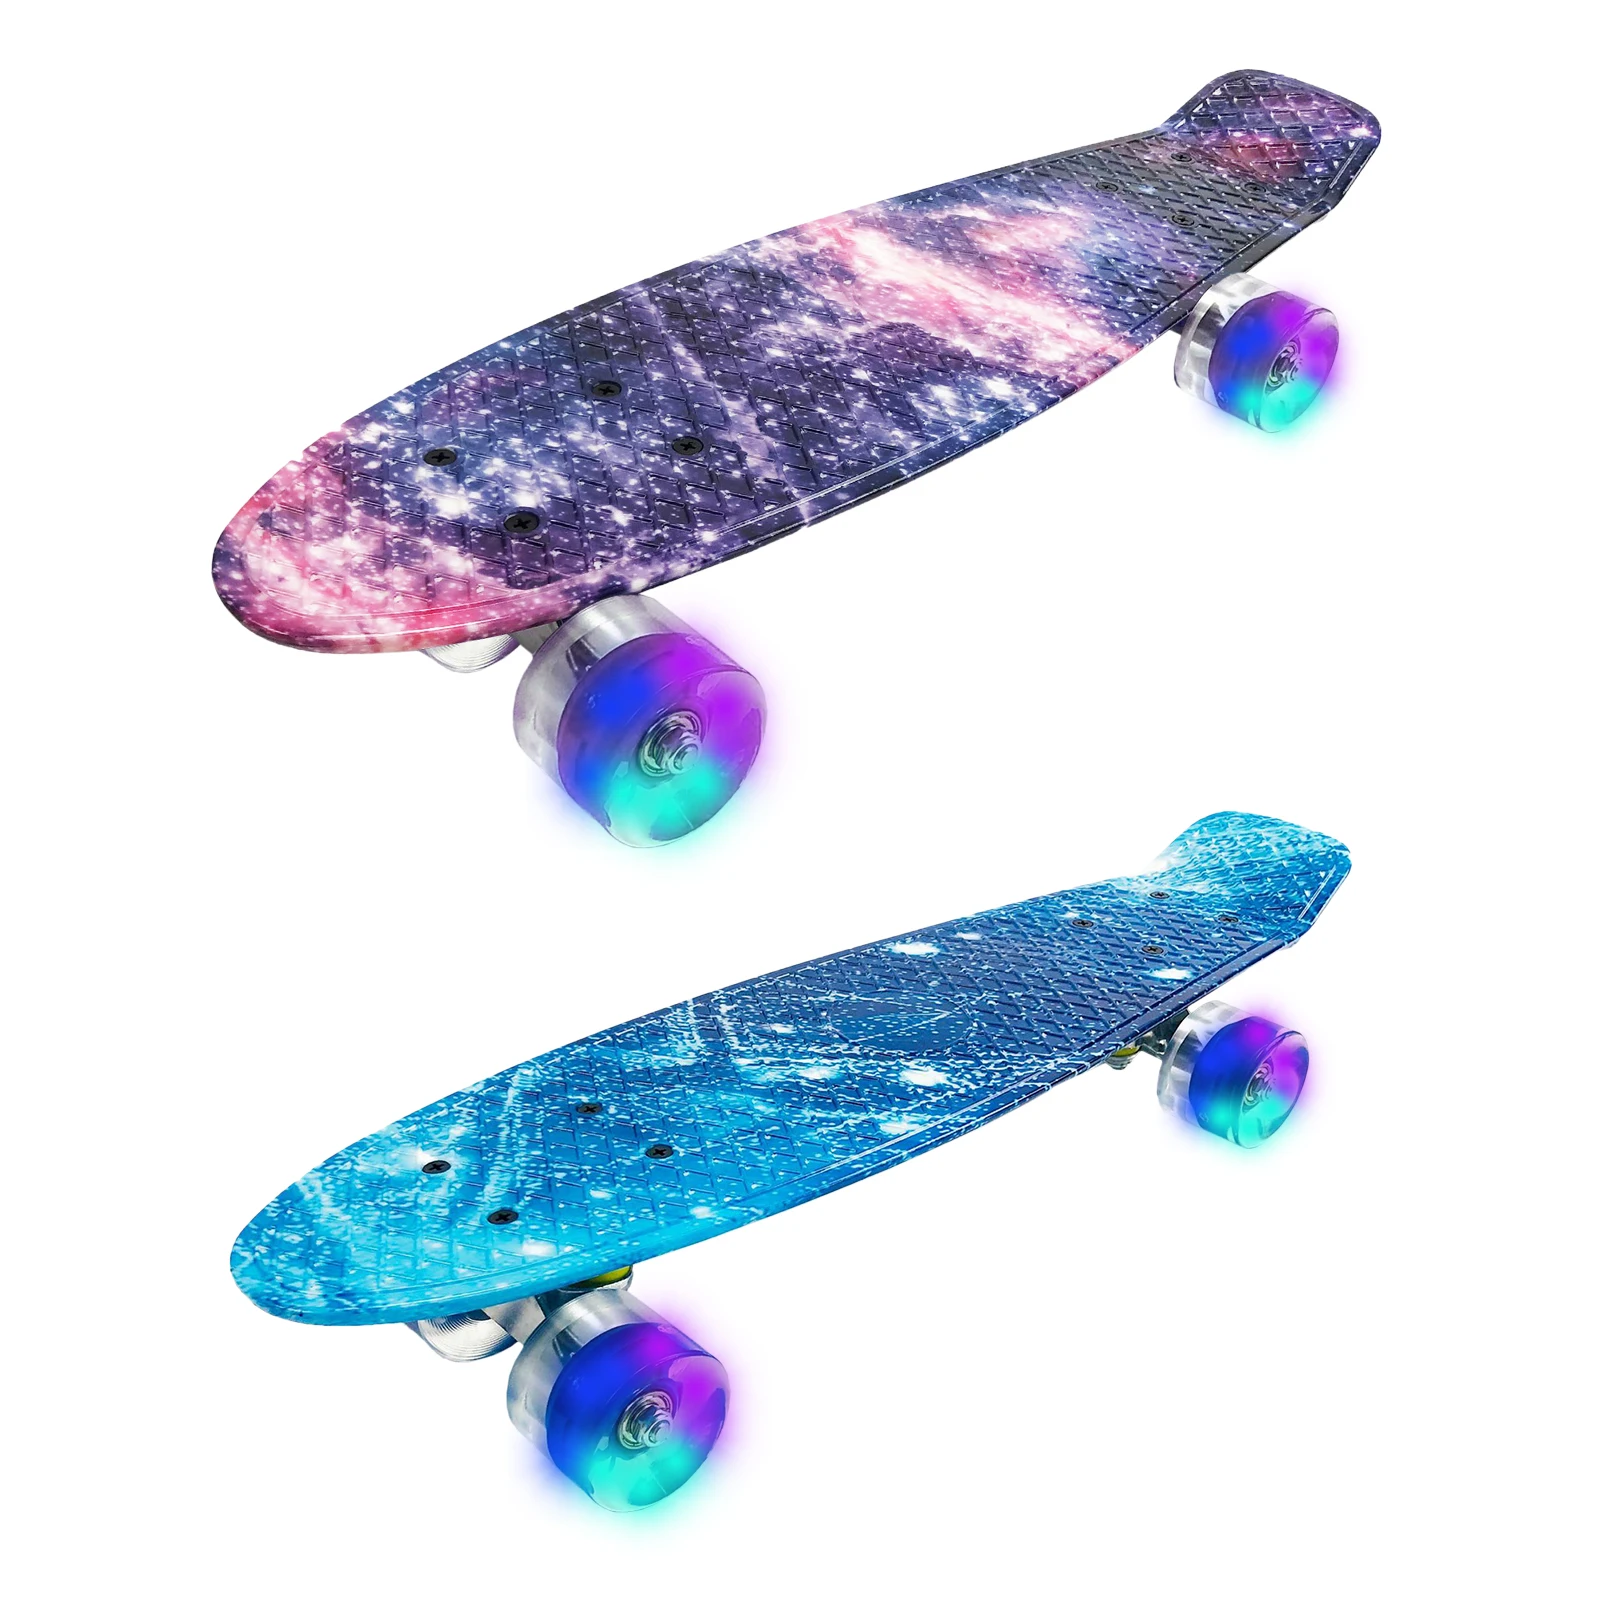 

Skateboard Cruiser Deck 22 Inch Four-wheel Longboard Fish Skate Board With LED Flashing Wheels Skateboard Deck For Kids Adult S